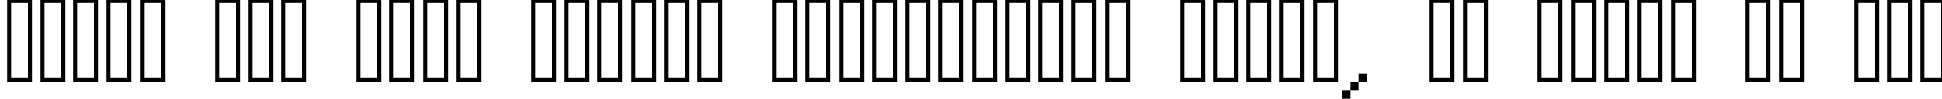 Пример написания шрифтом italic 08_56 текста на русском